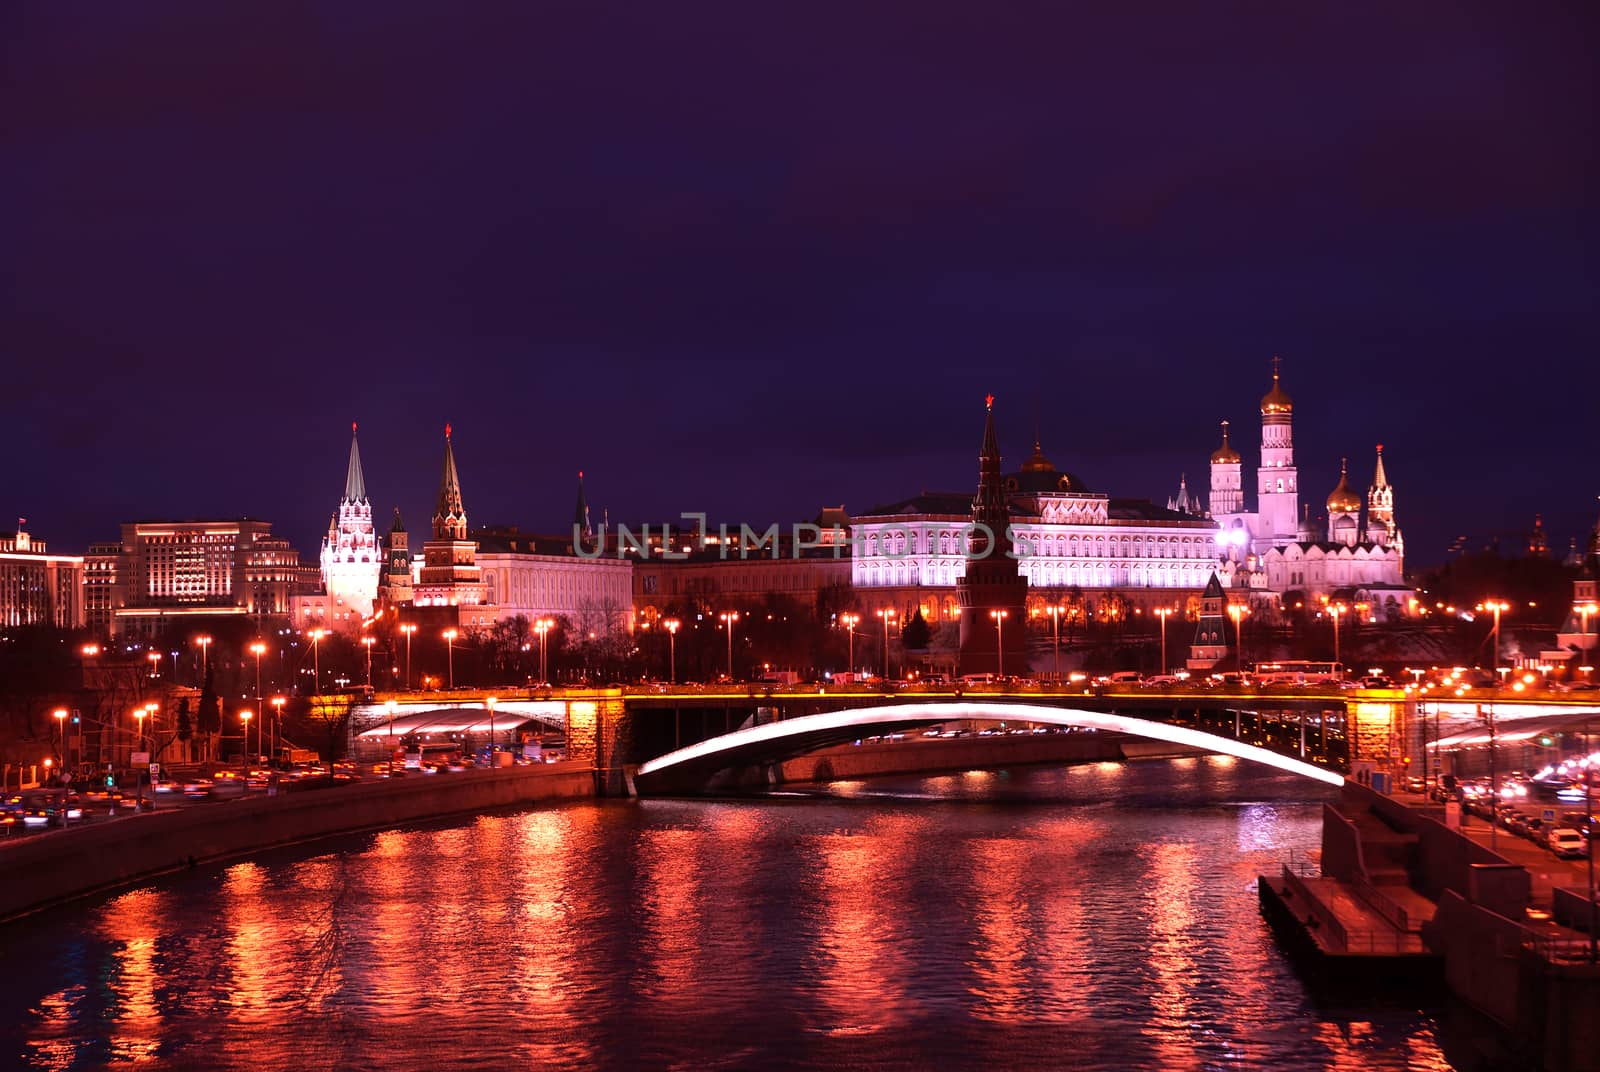 Night landscape of the Kremlin by Vadimdem